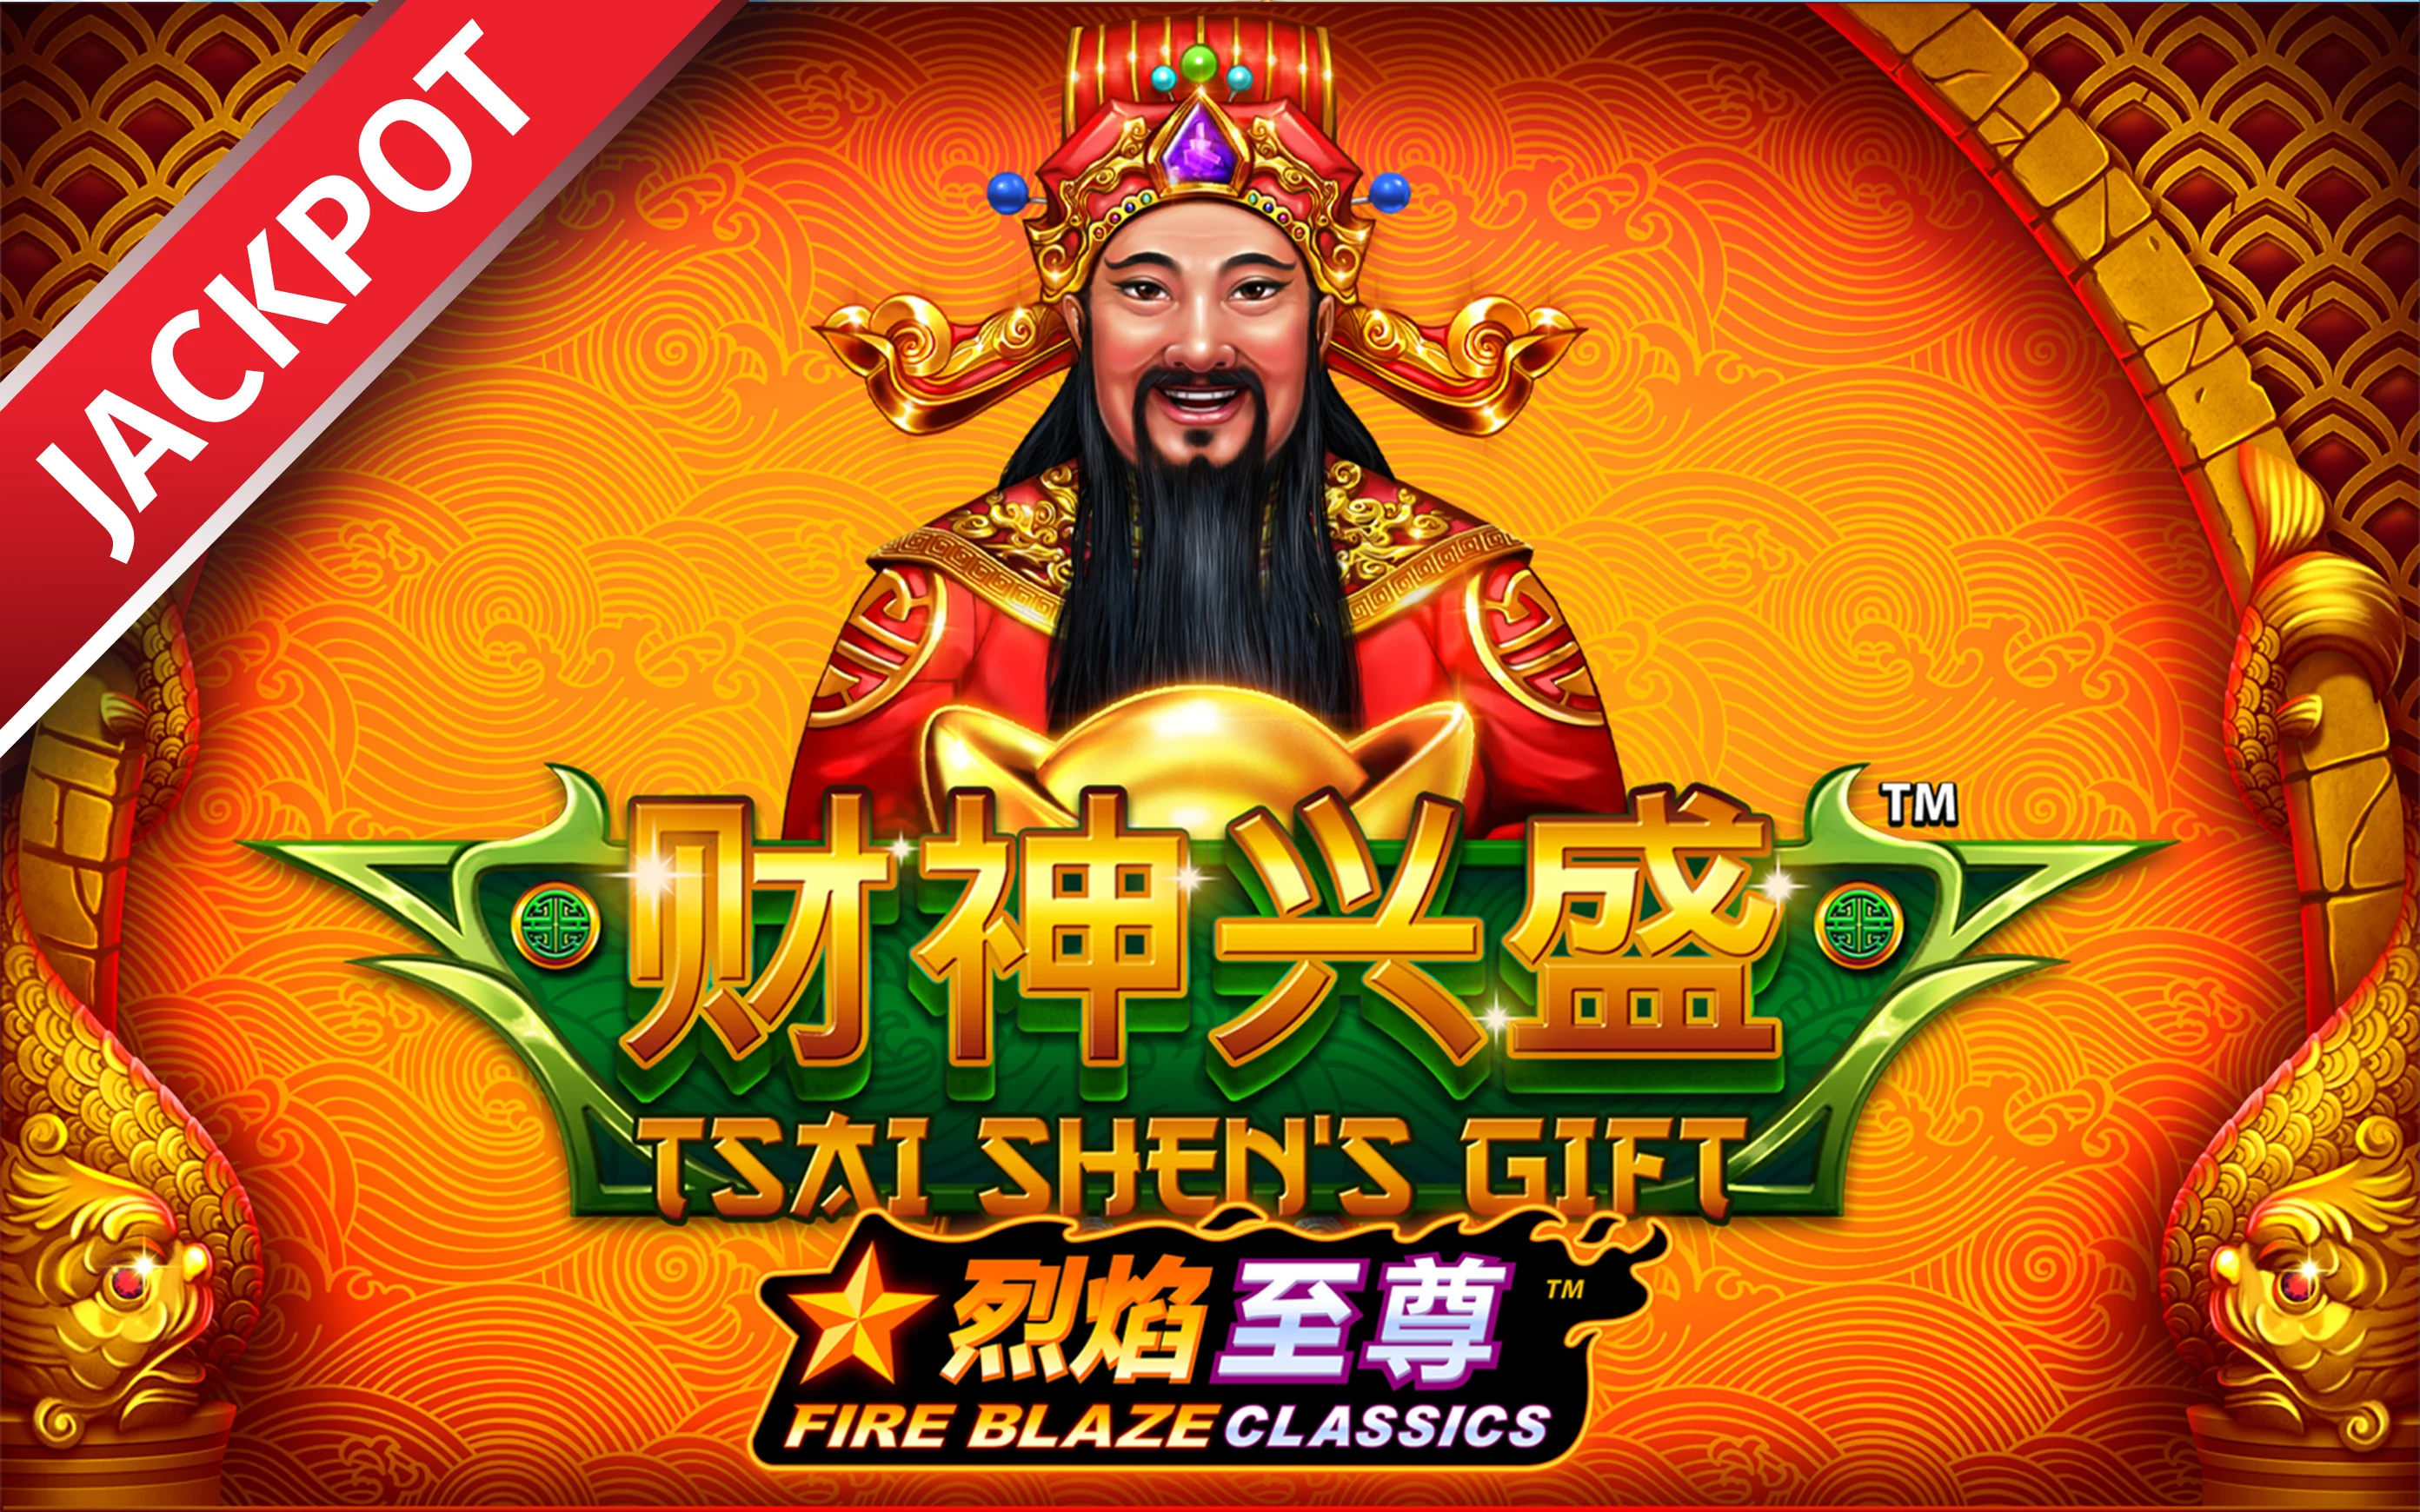 Play Fire Blaze: Tsai Shens Gift on Starcasino.be online casino